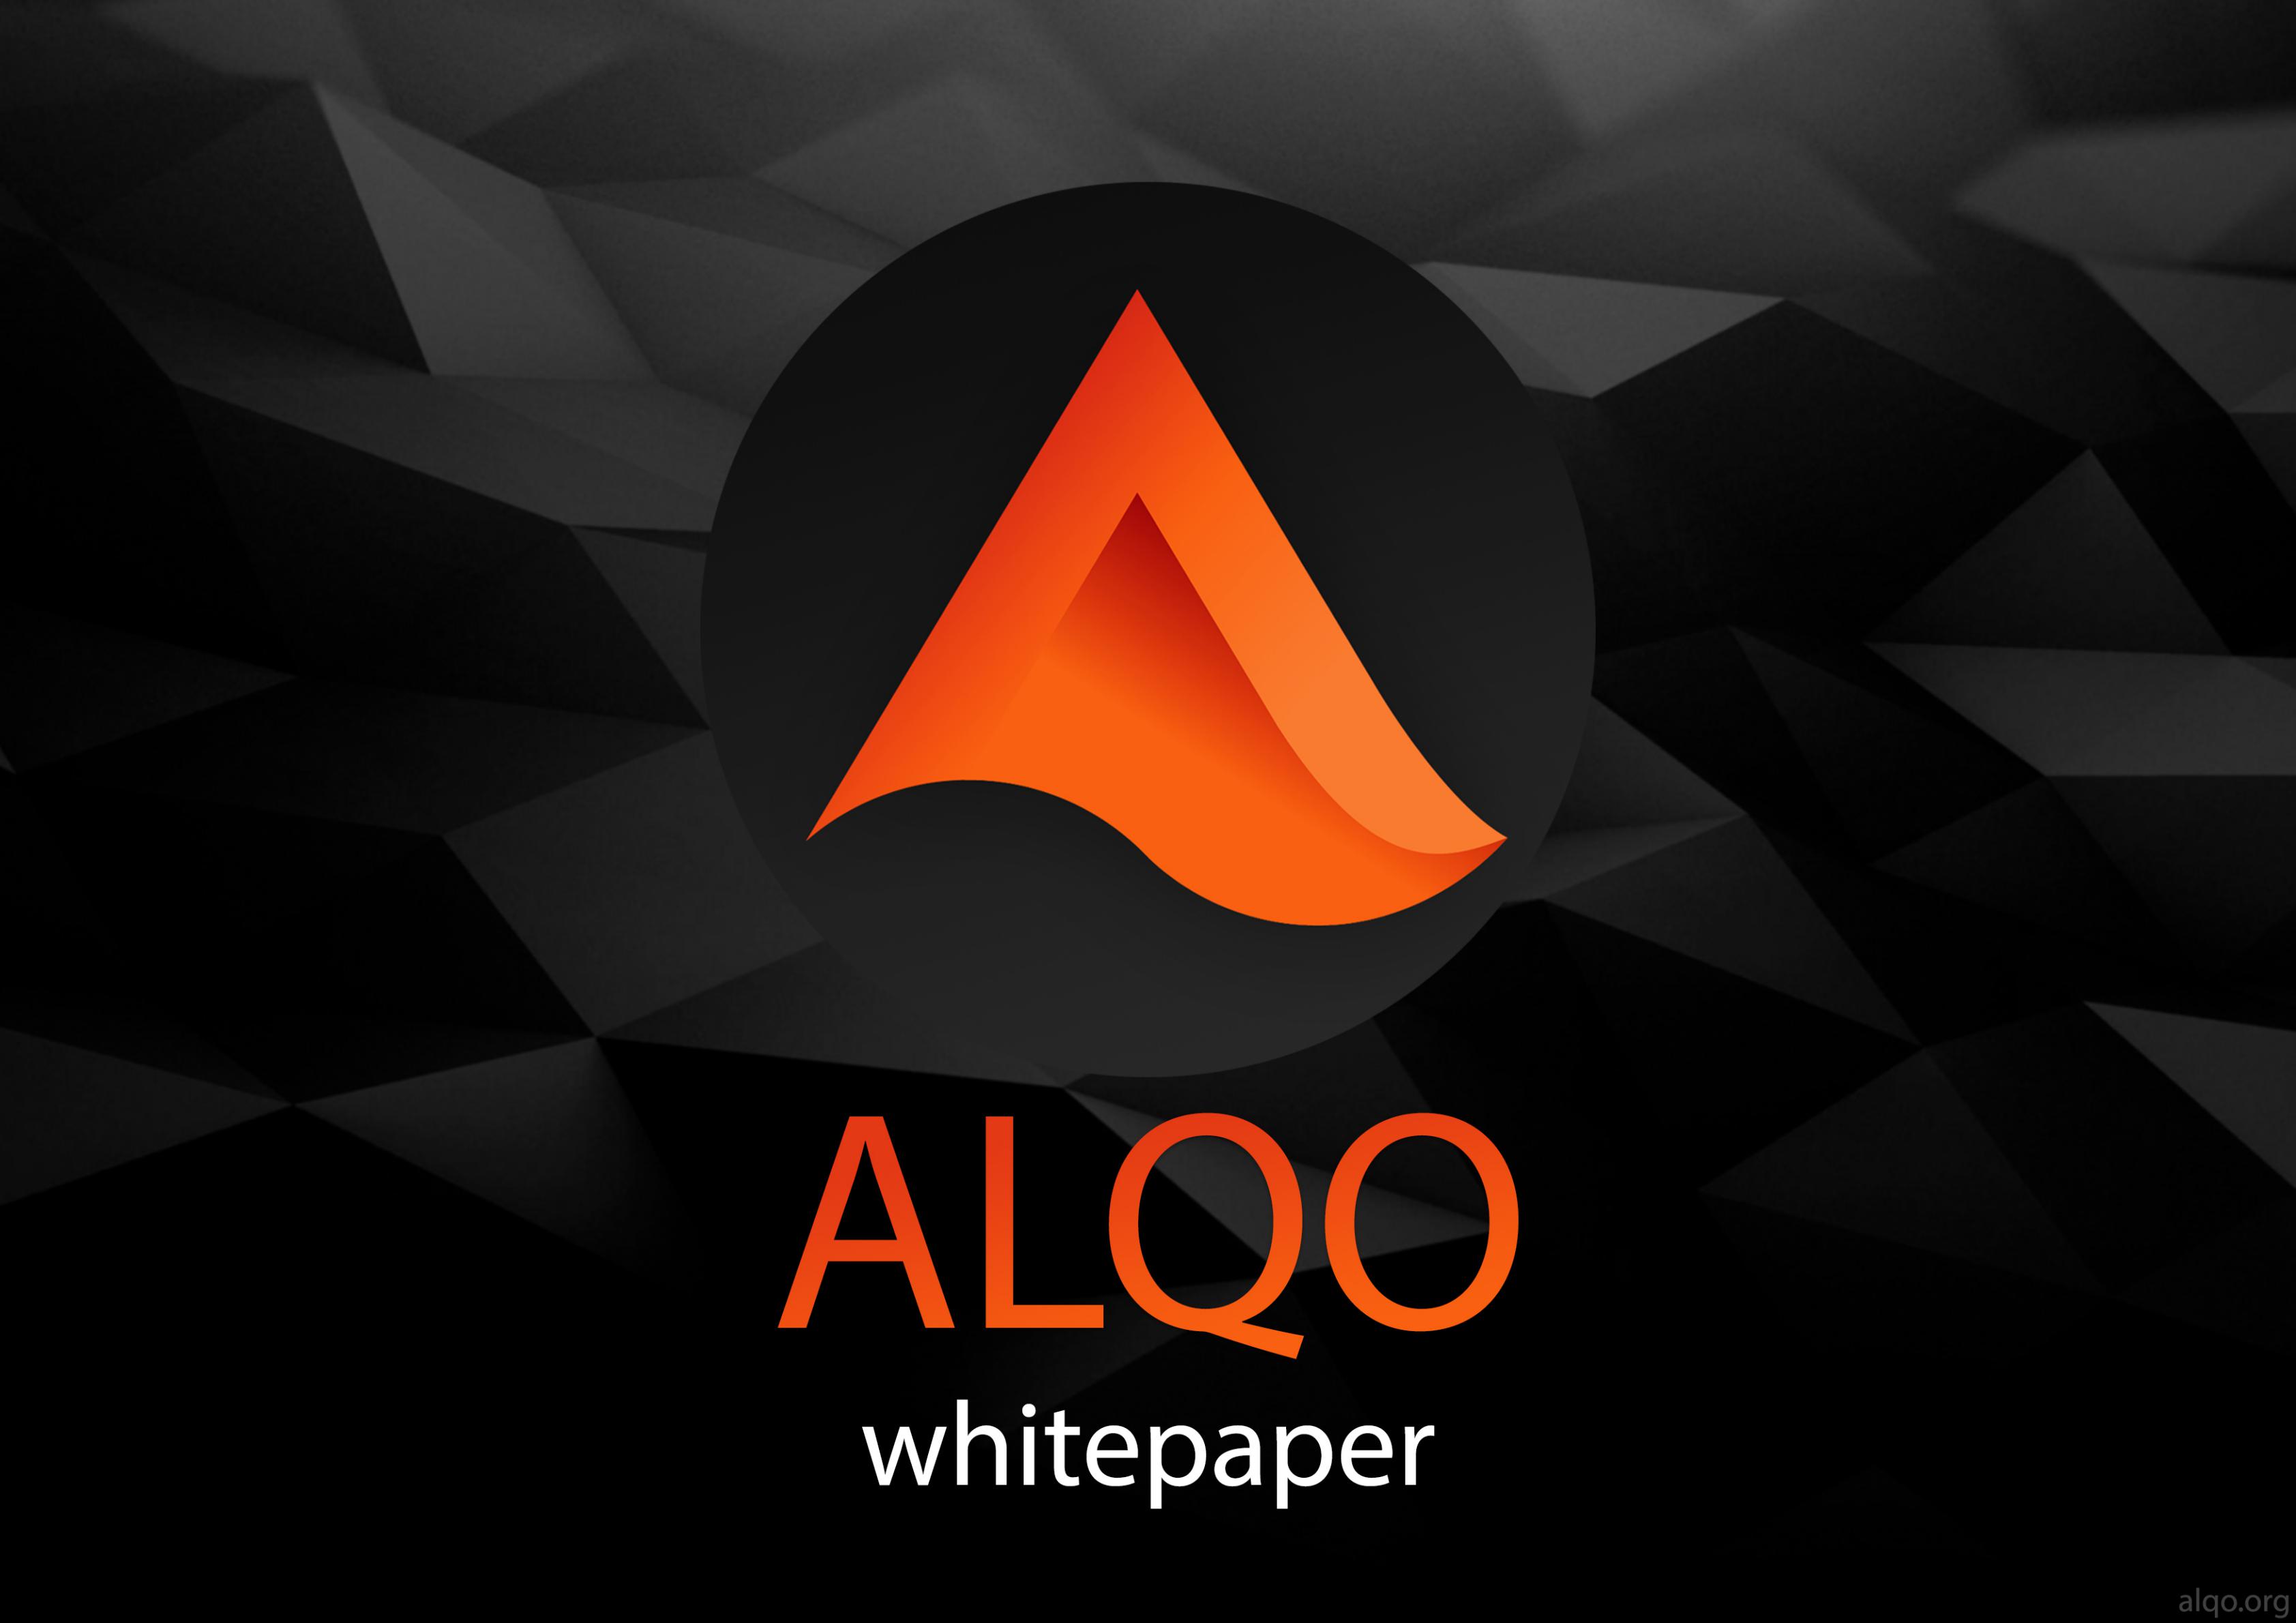 ALQO_whitepaper_00.jpg